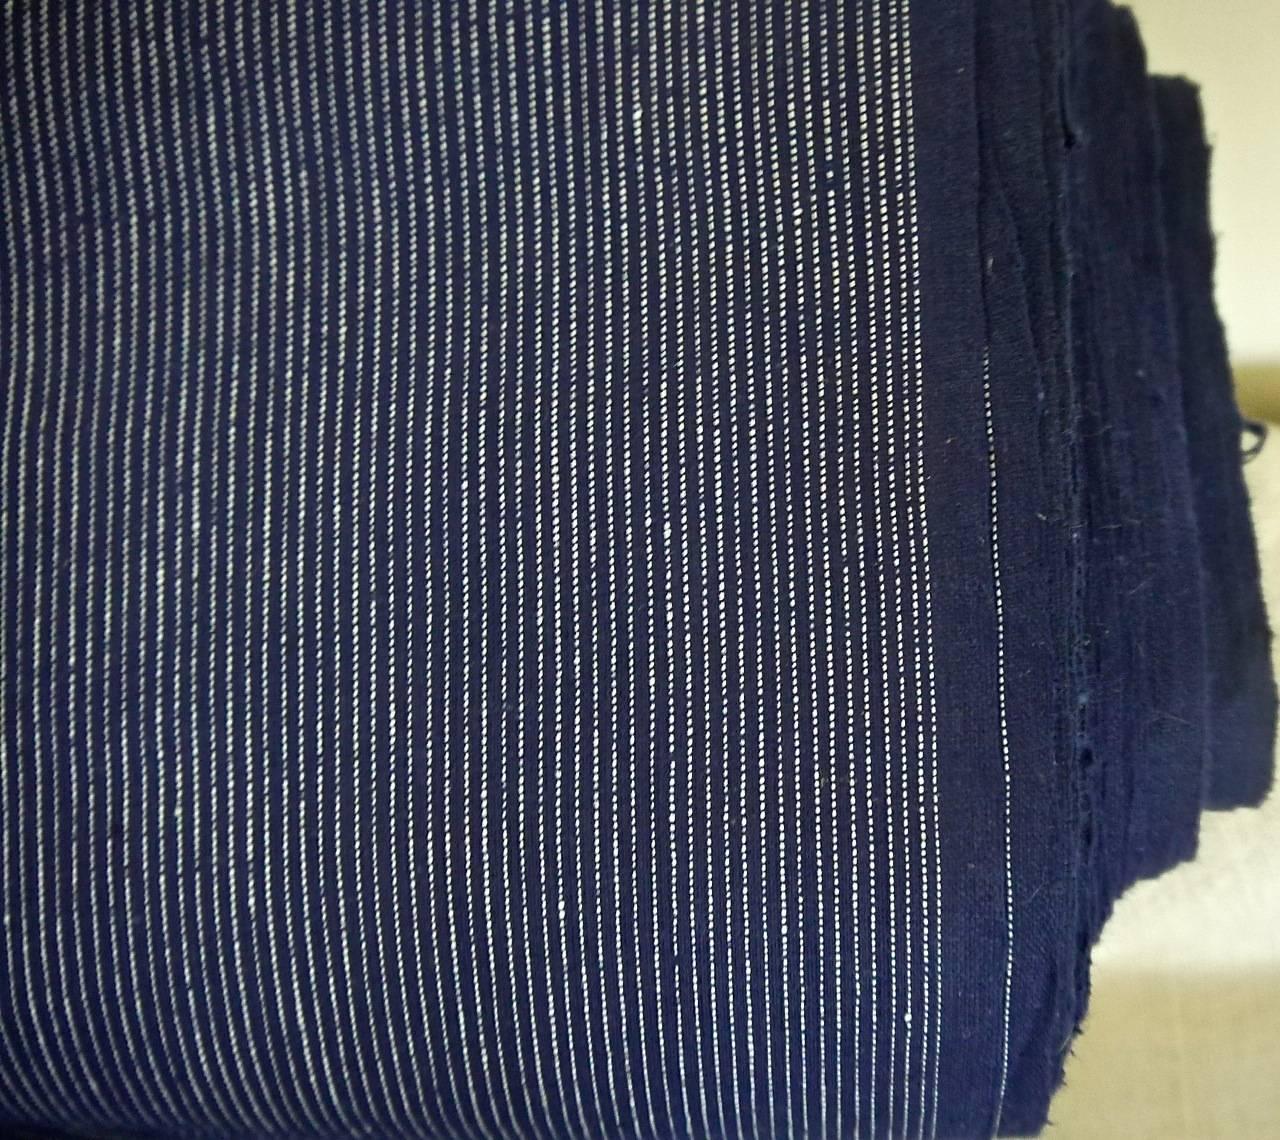 Antique French Roll of Unused Woven Dark Indigo Striped Cotton Cloth 1